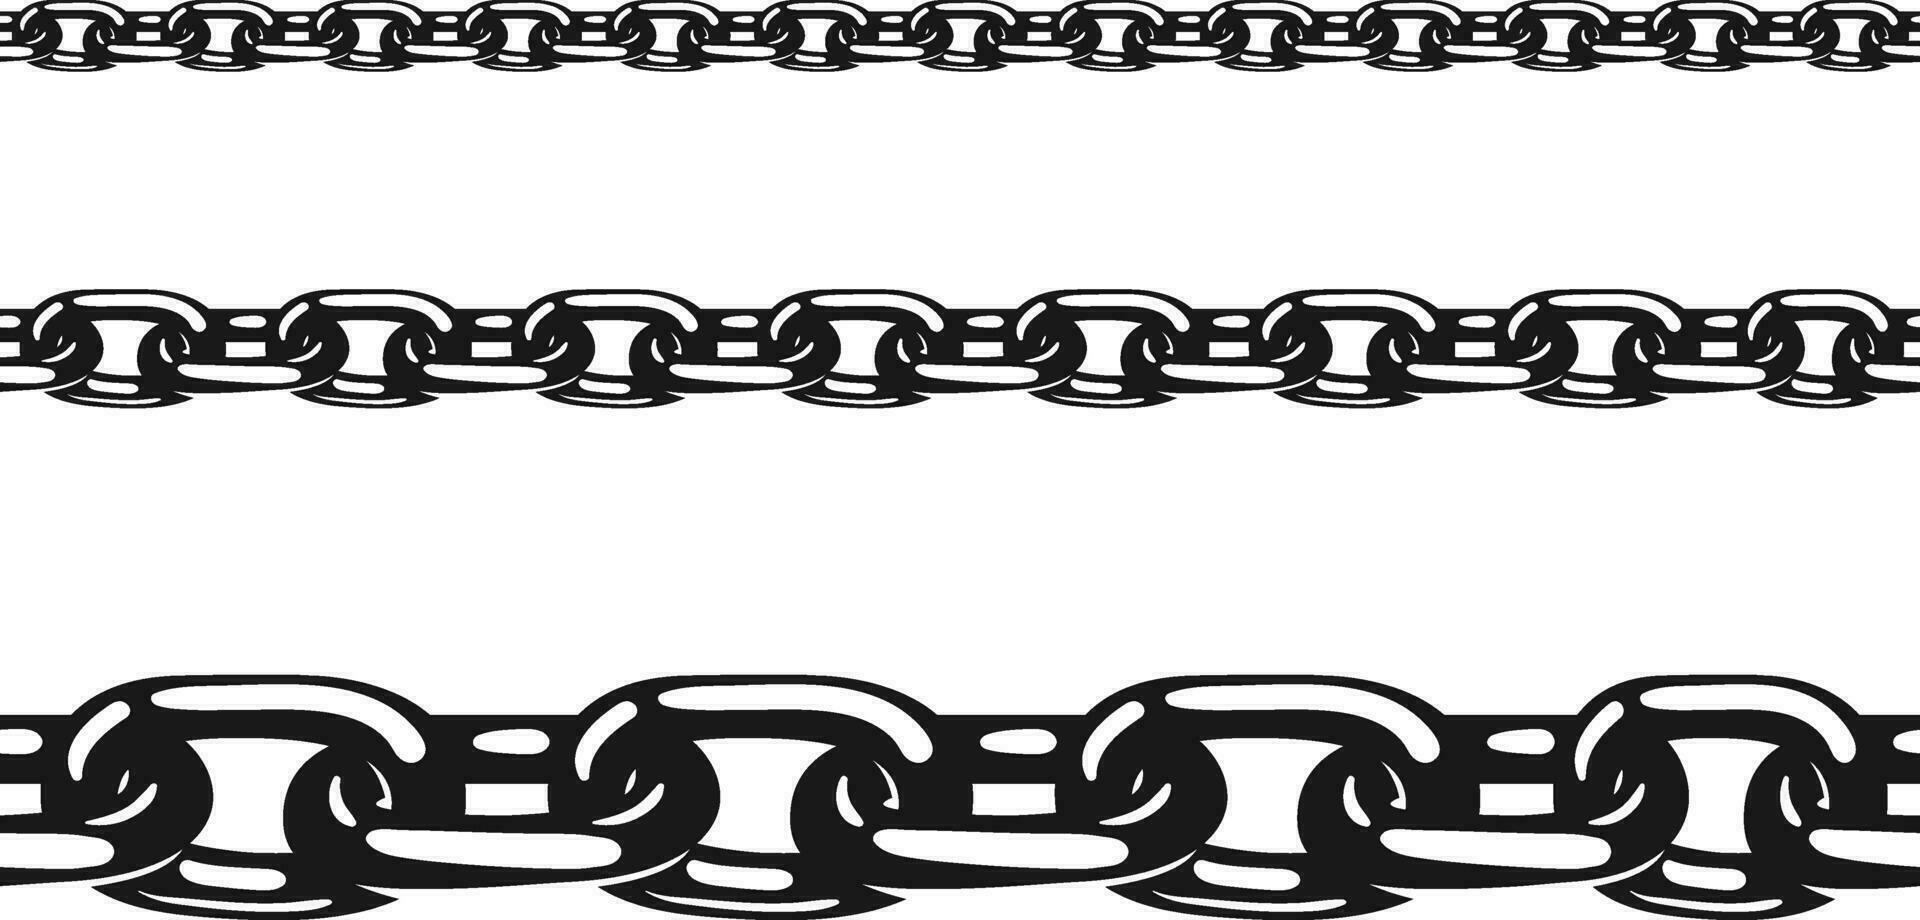 Chain seamless vector illustration. Black print design isolated on white.